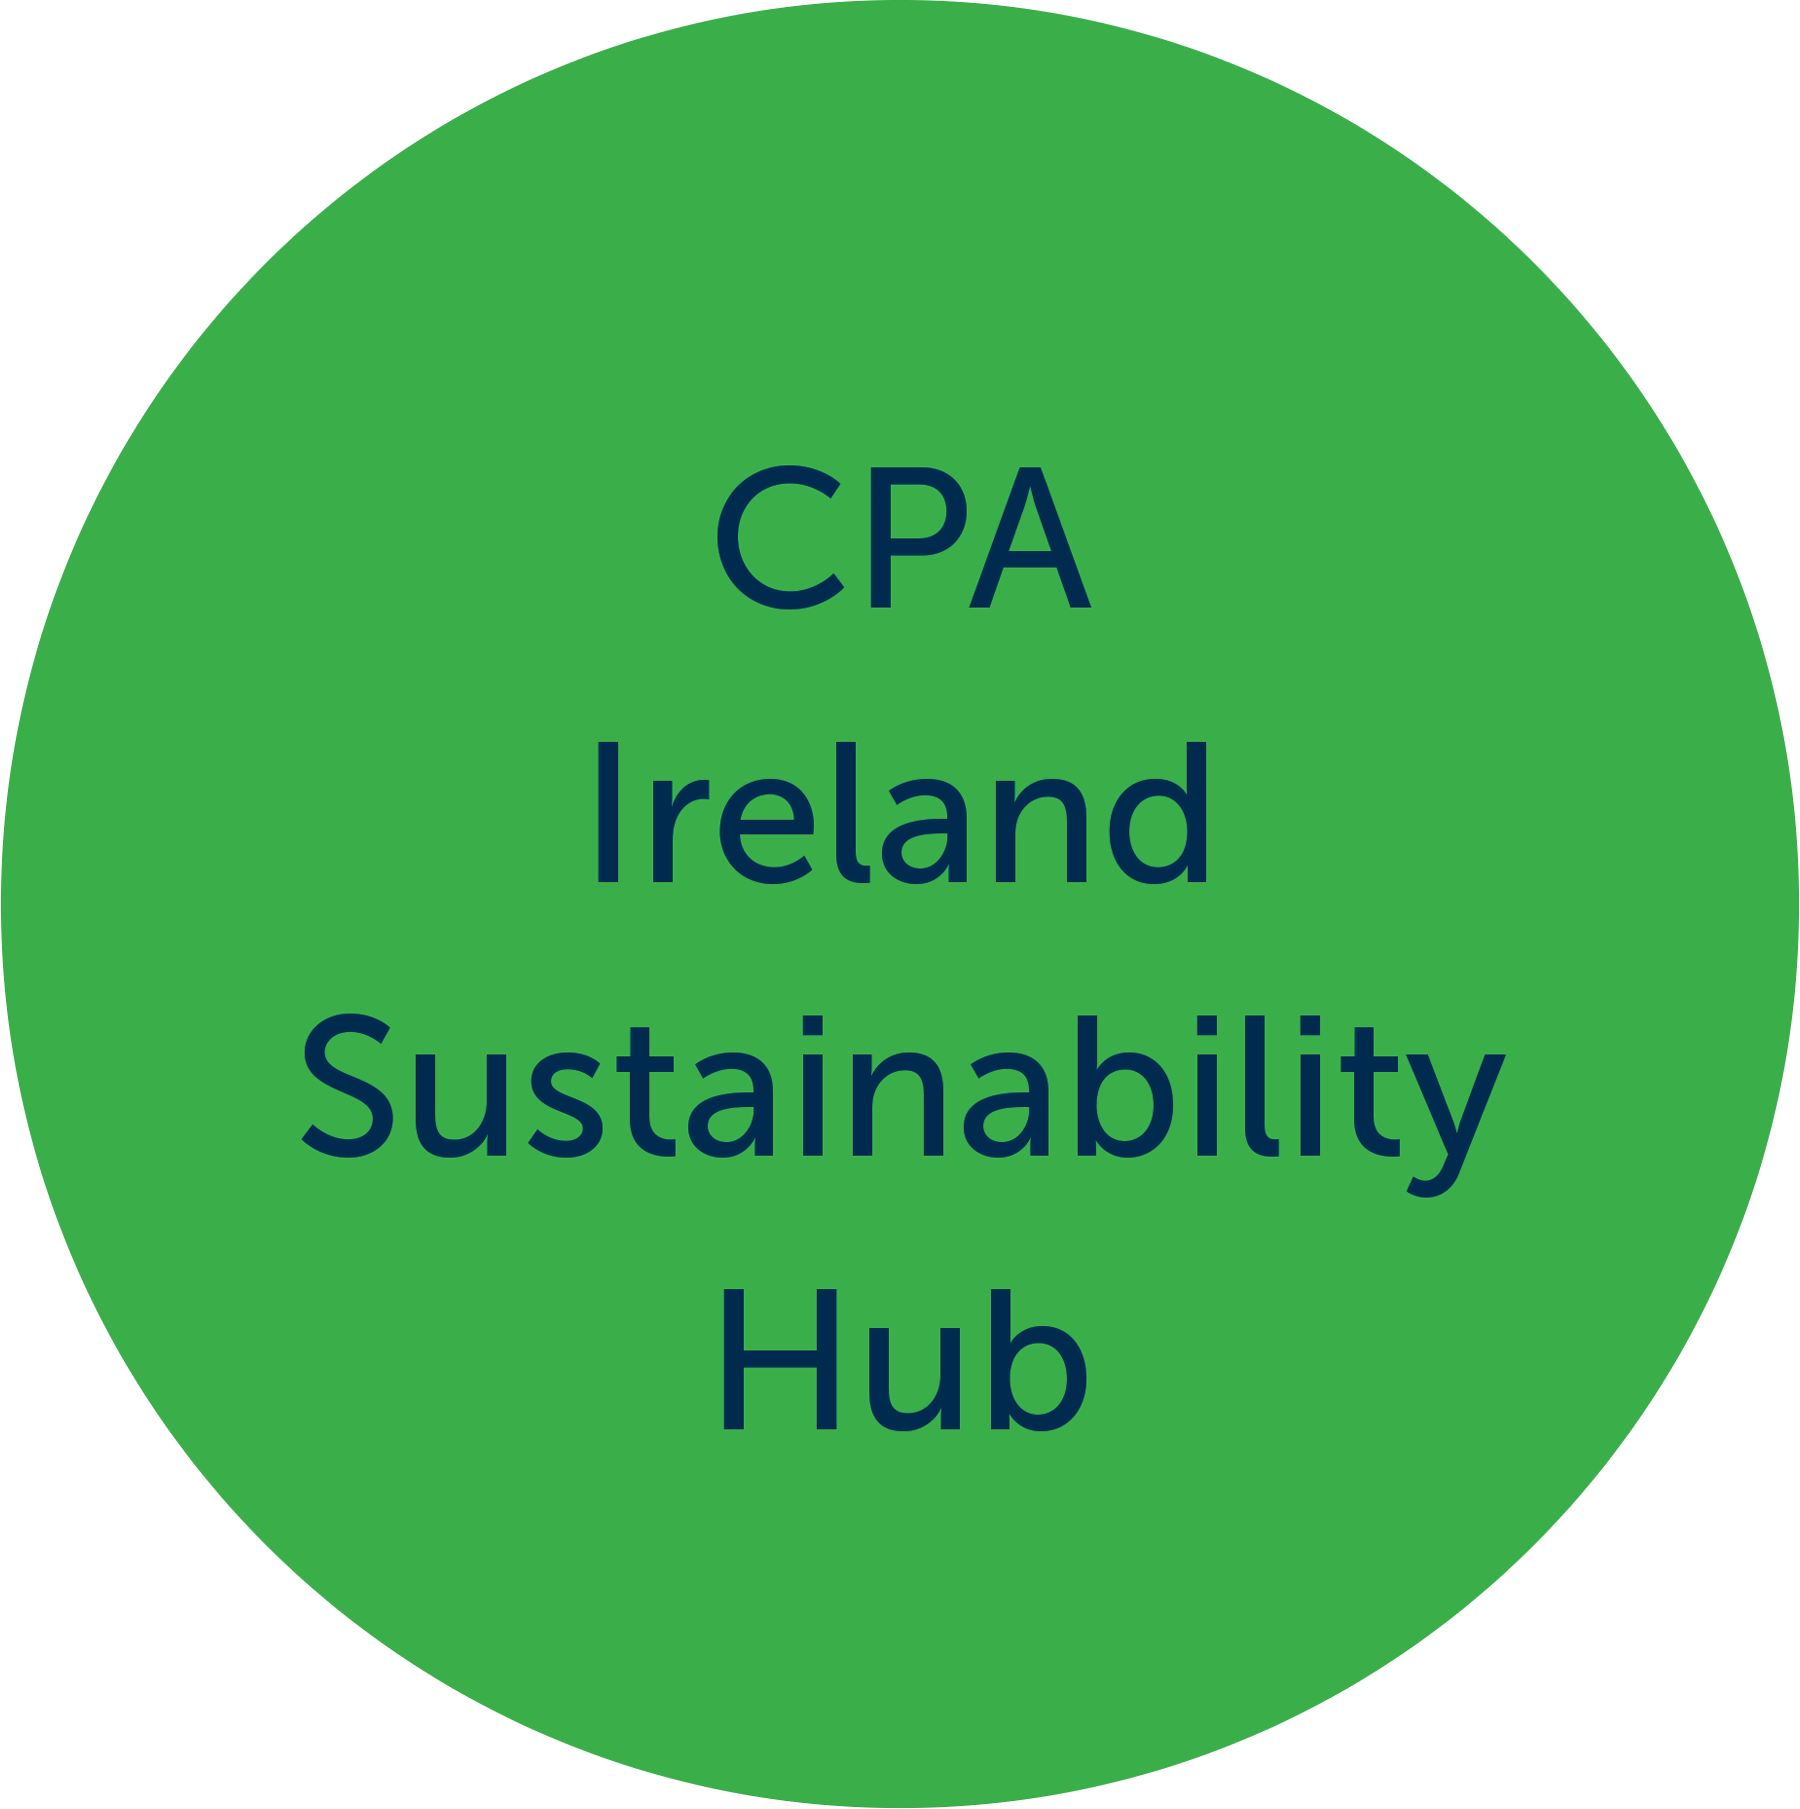 CPA Ireland Sustainability Hub sticker